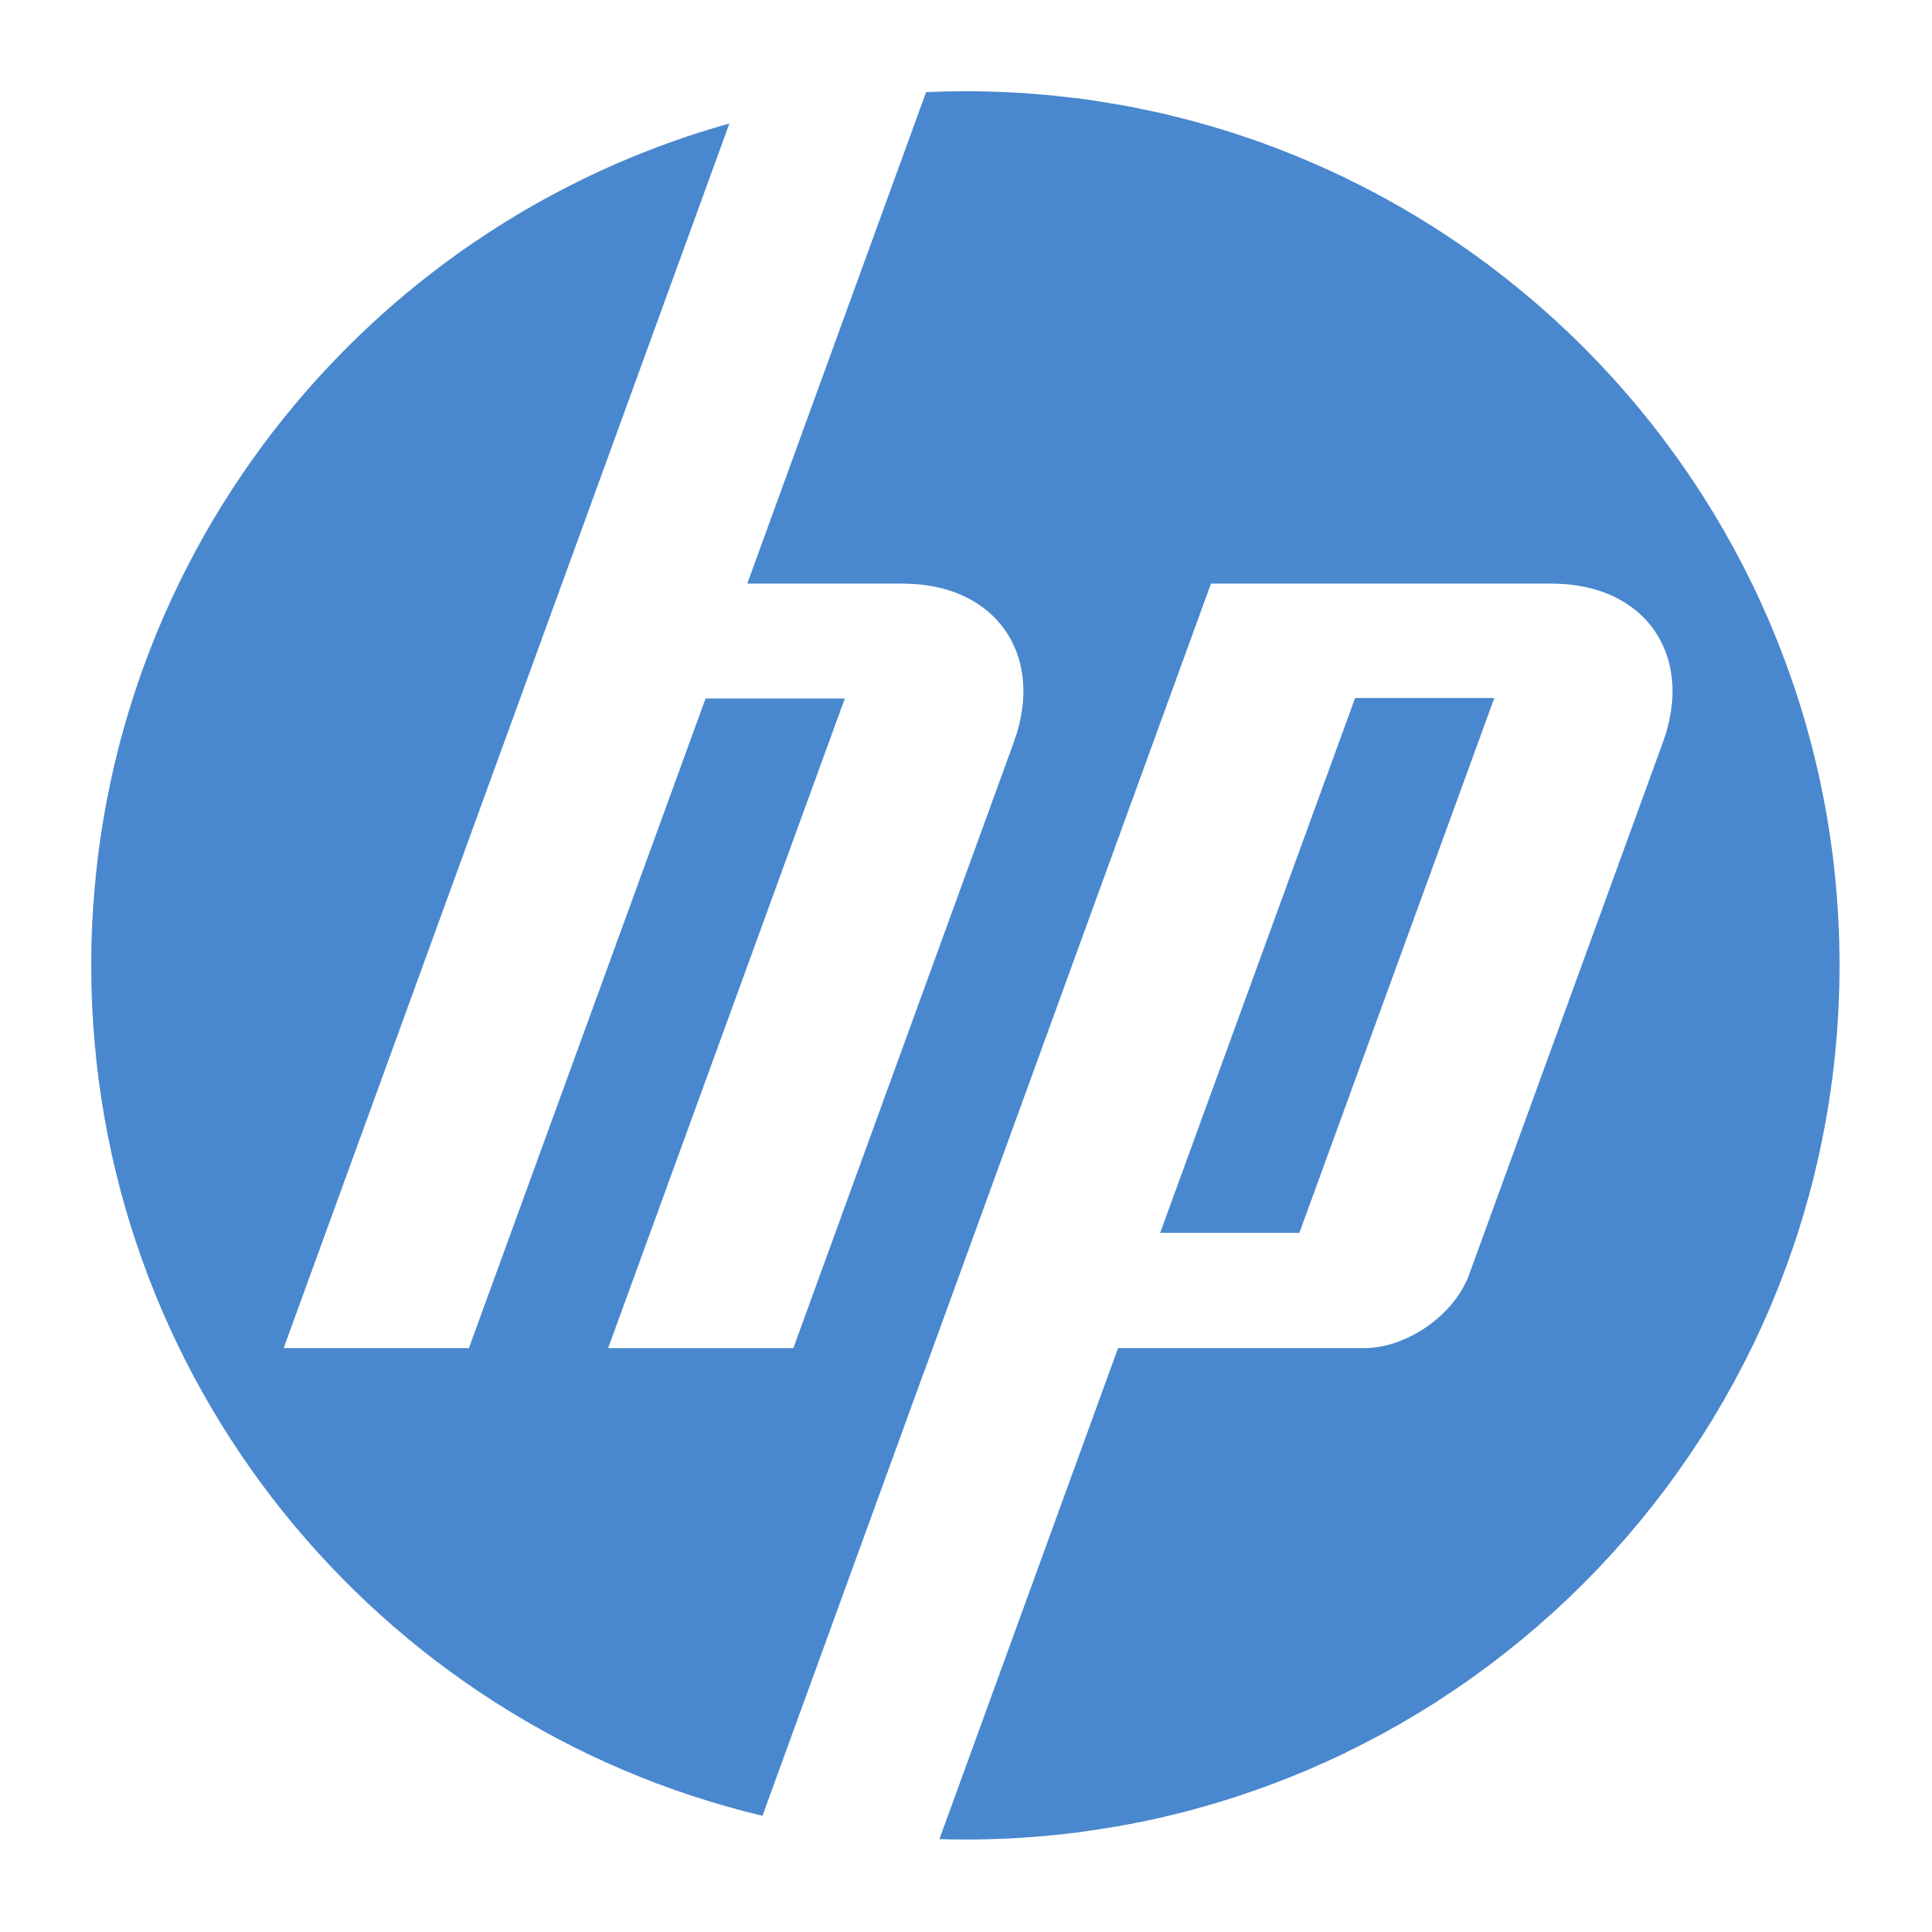 HP Intel Logo - HP Logo, Hewlett-Packard symbol meaning, history and evolution